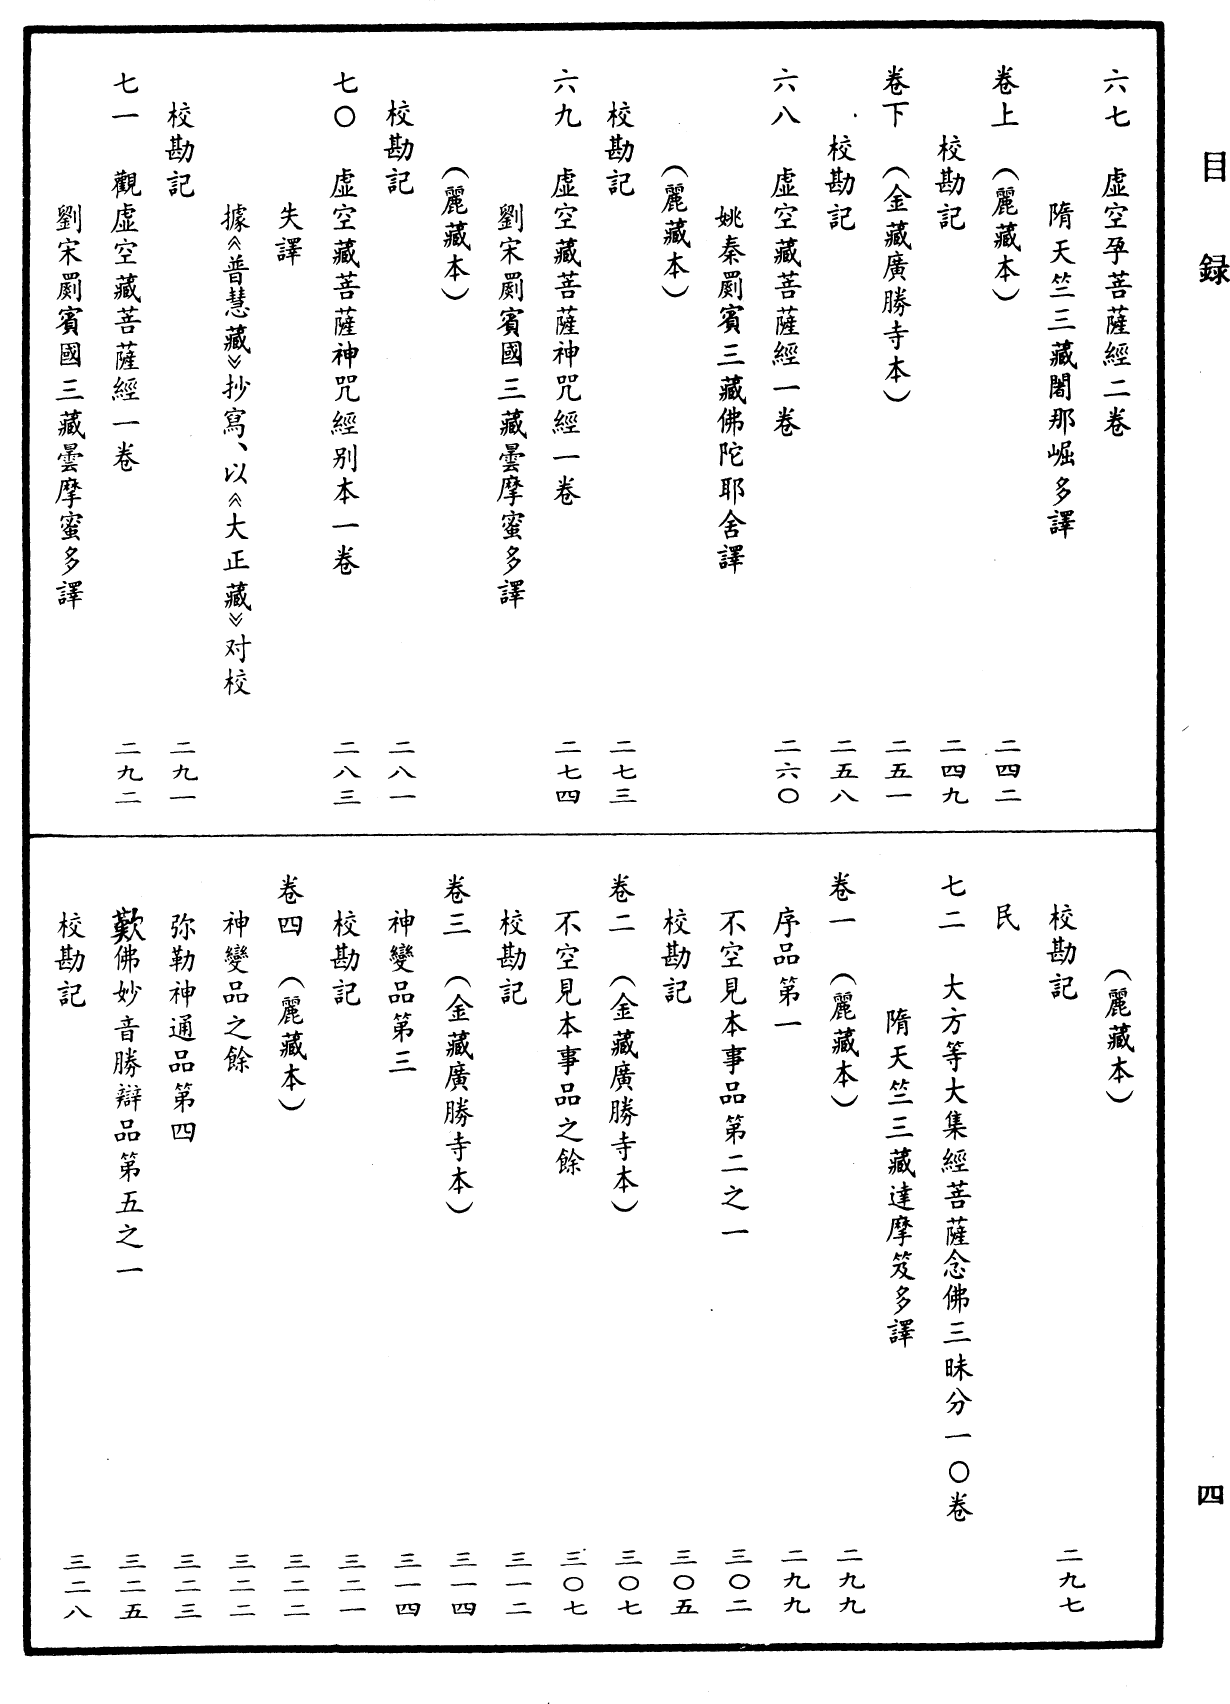 File:《中華大藏經》 第11冊 目録 (4).png